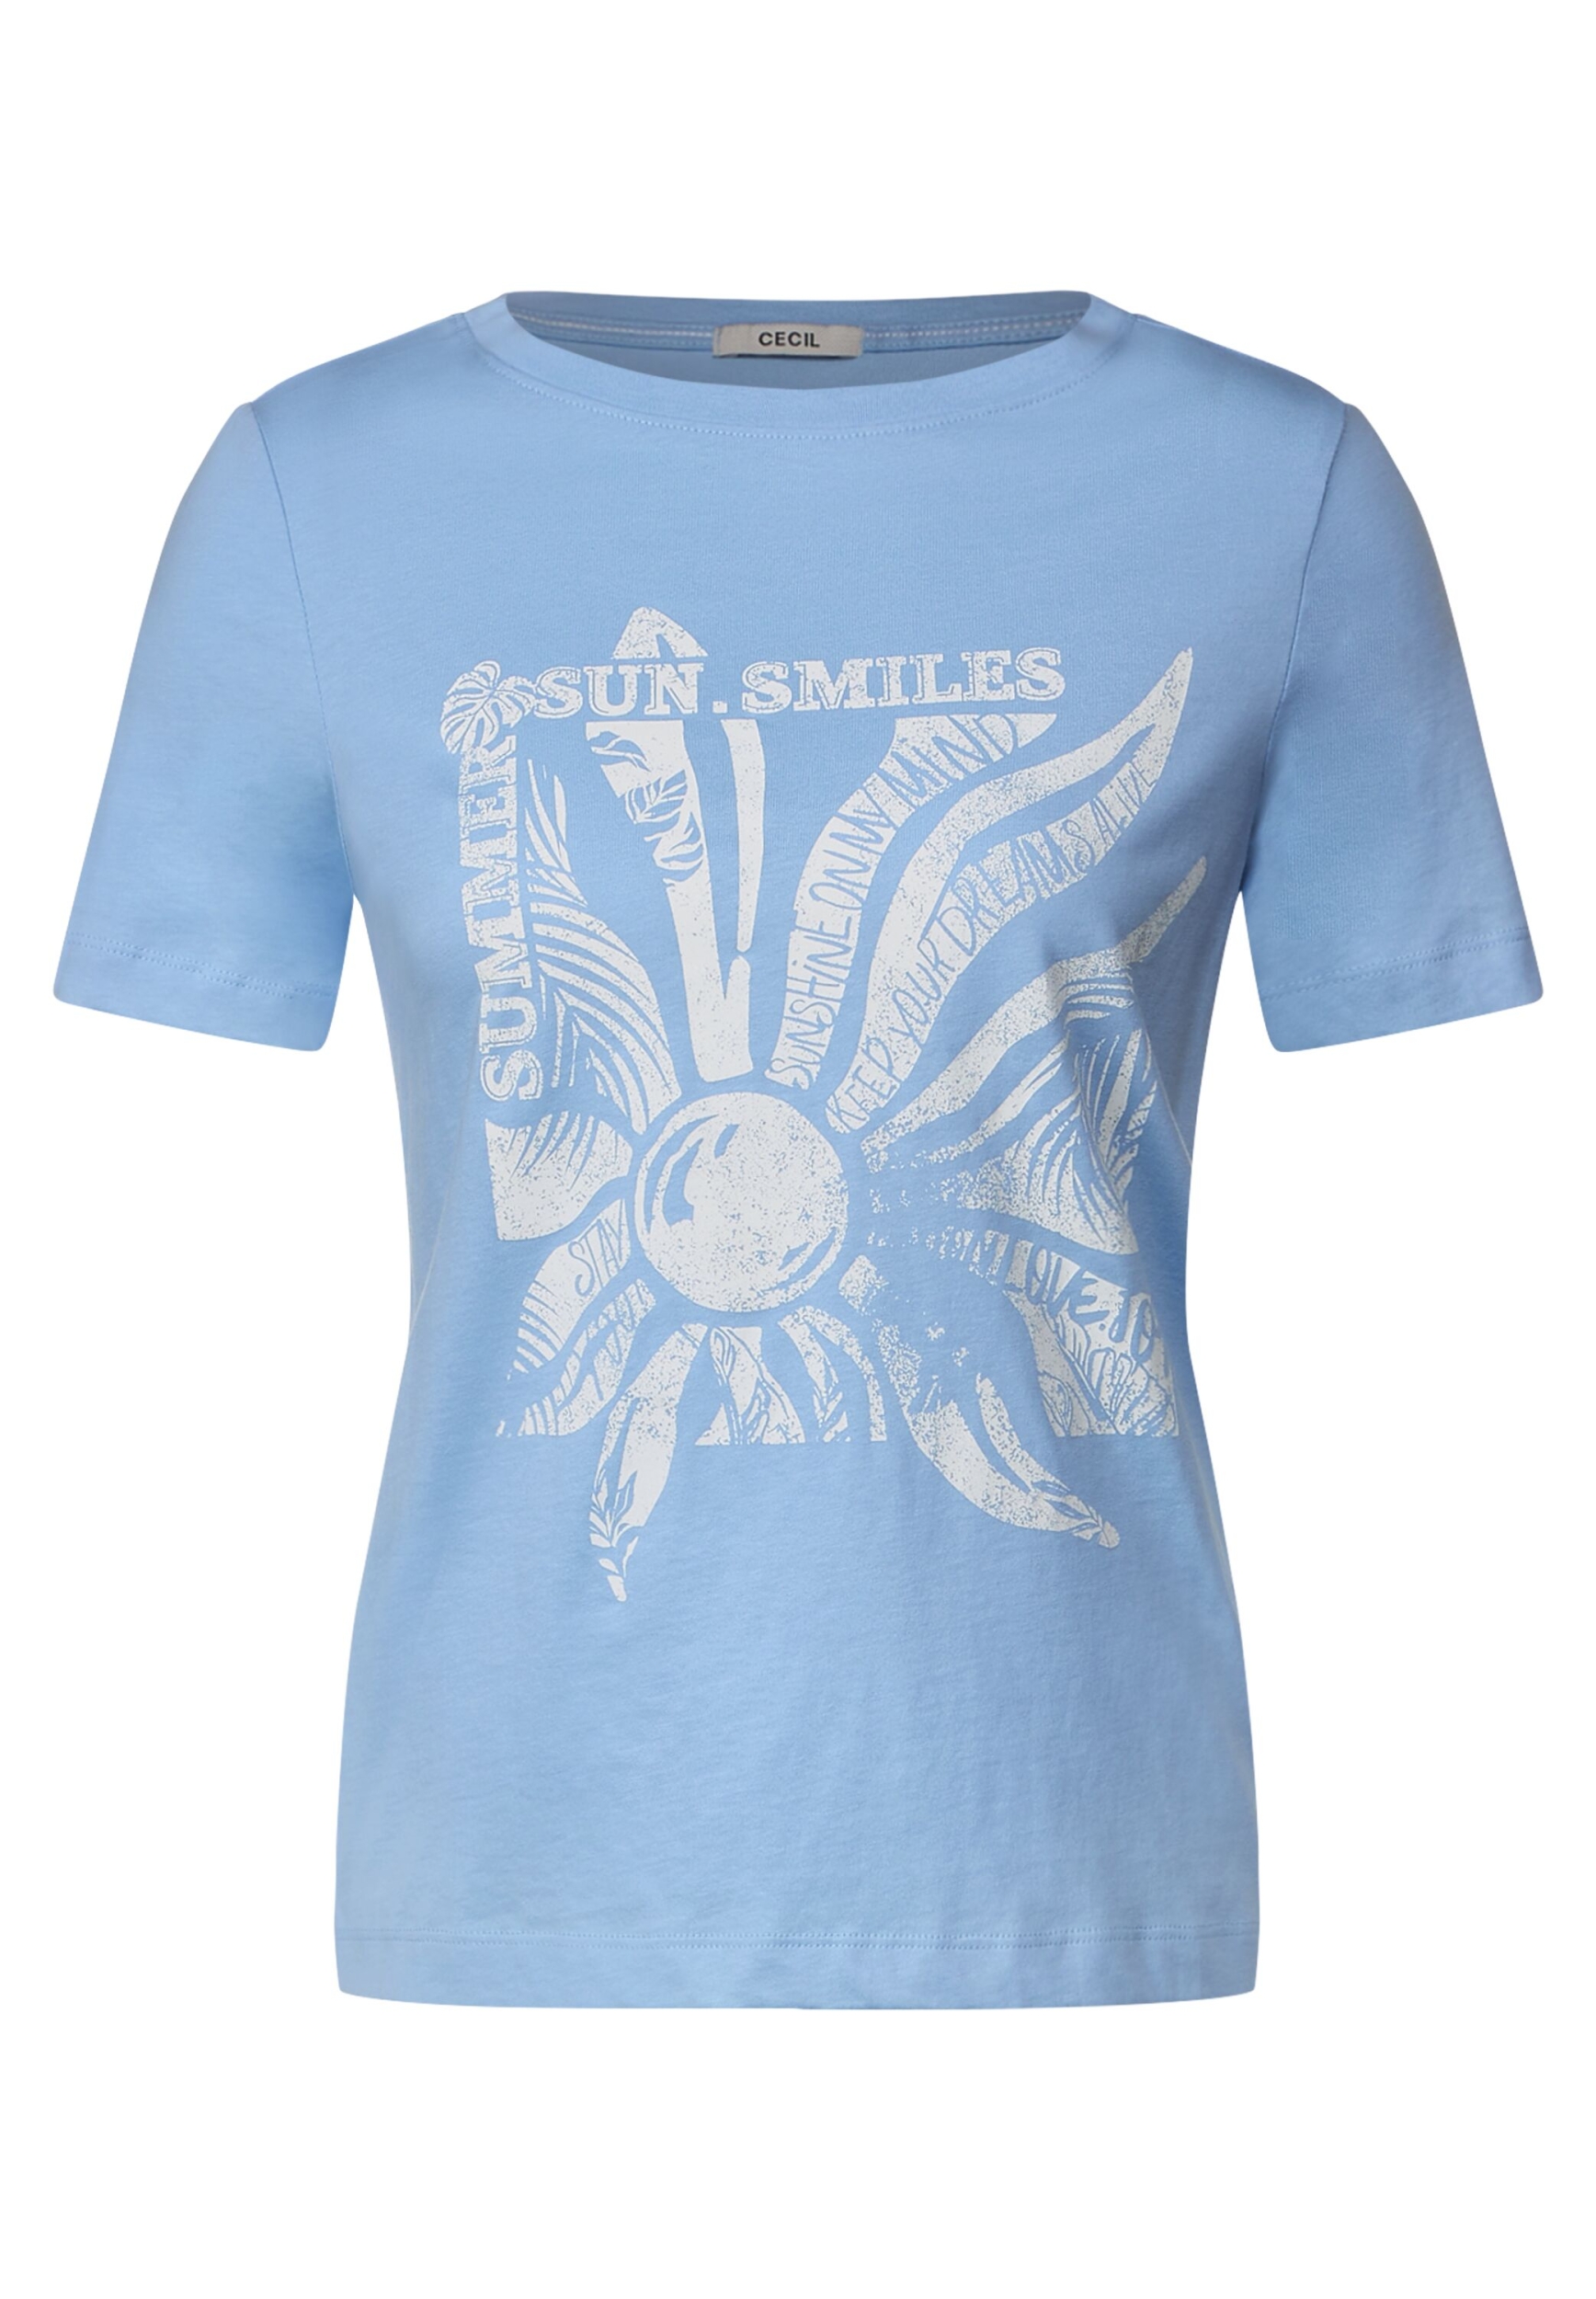 Sun FP Shirt | S | tranquil blue | B320051-23970-S